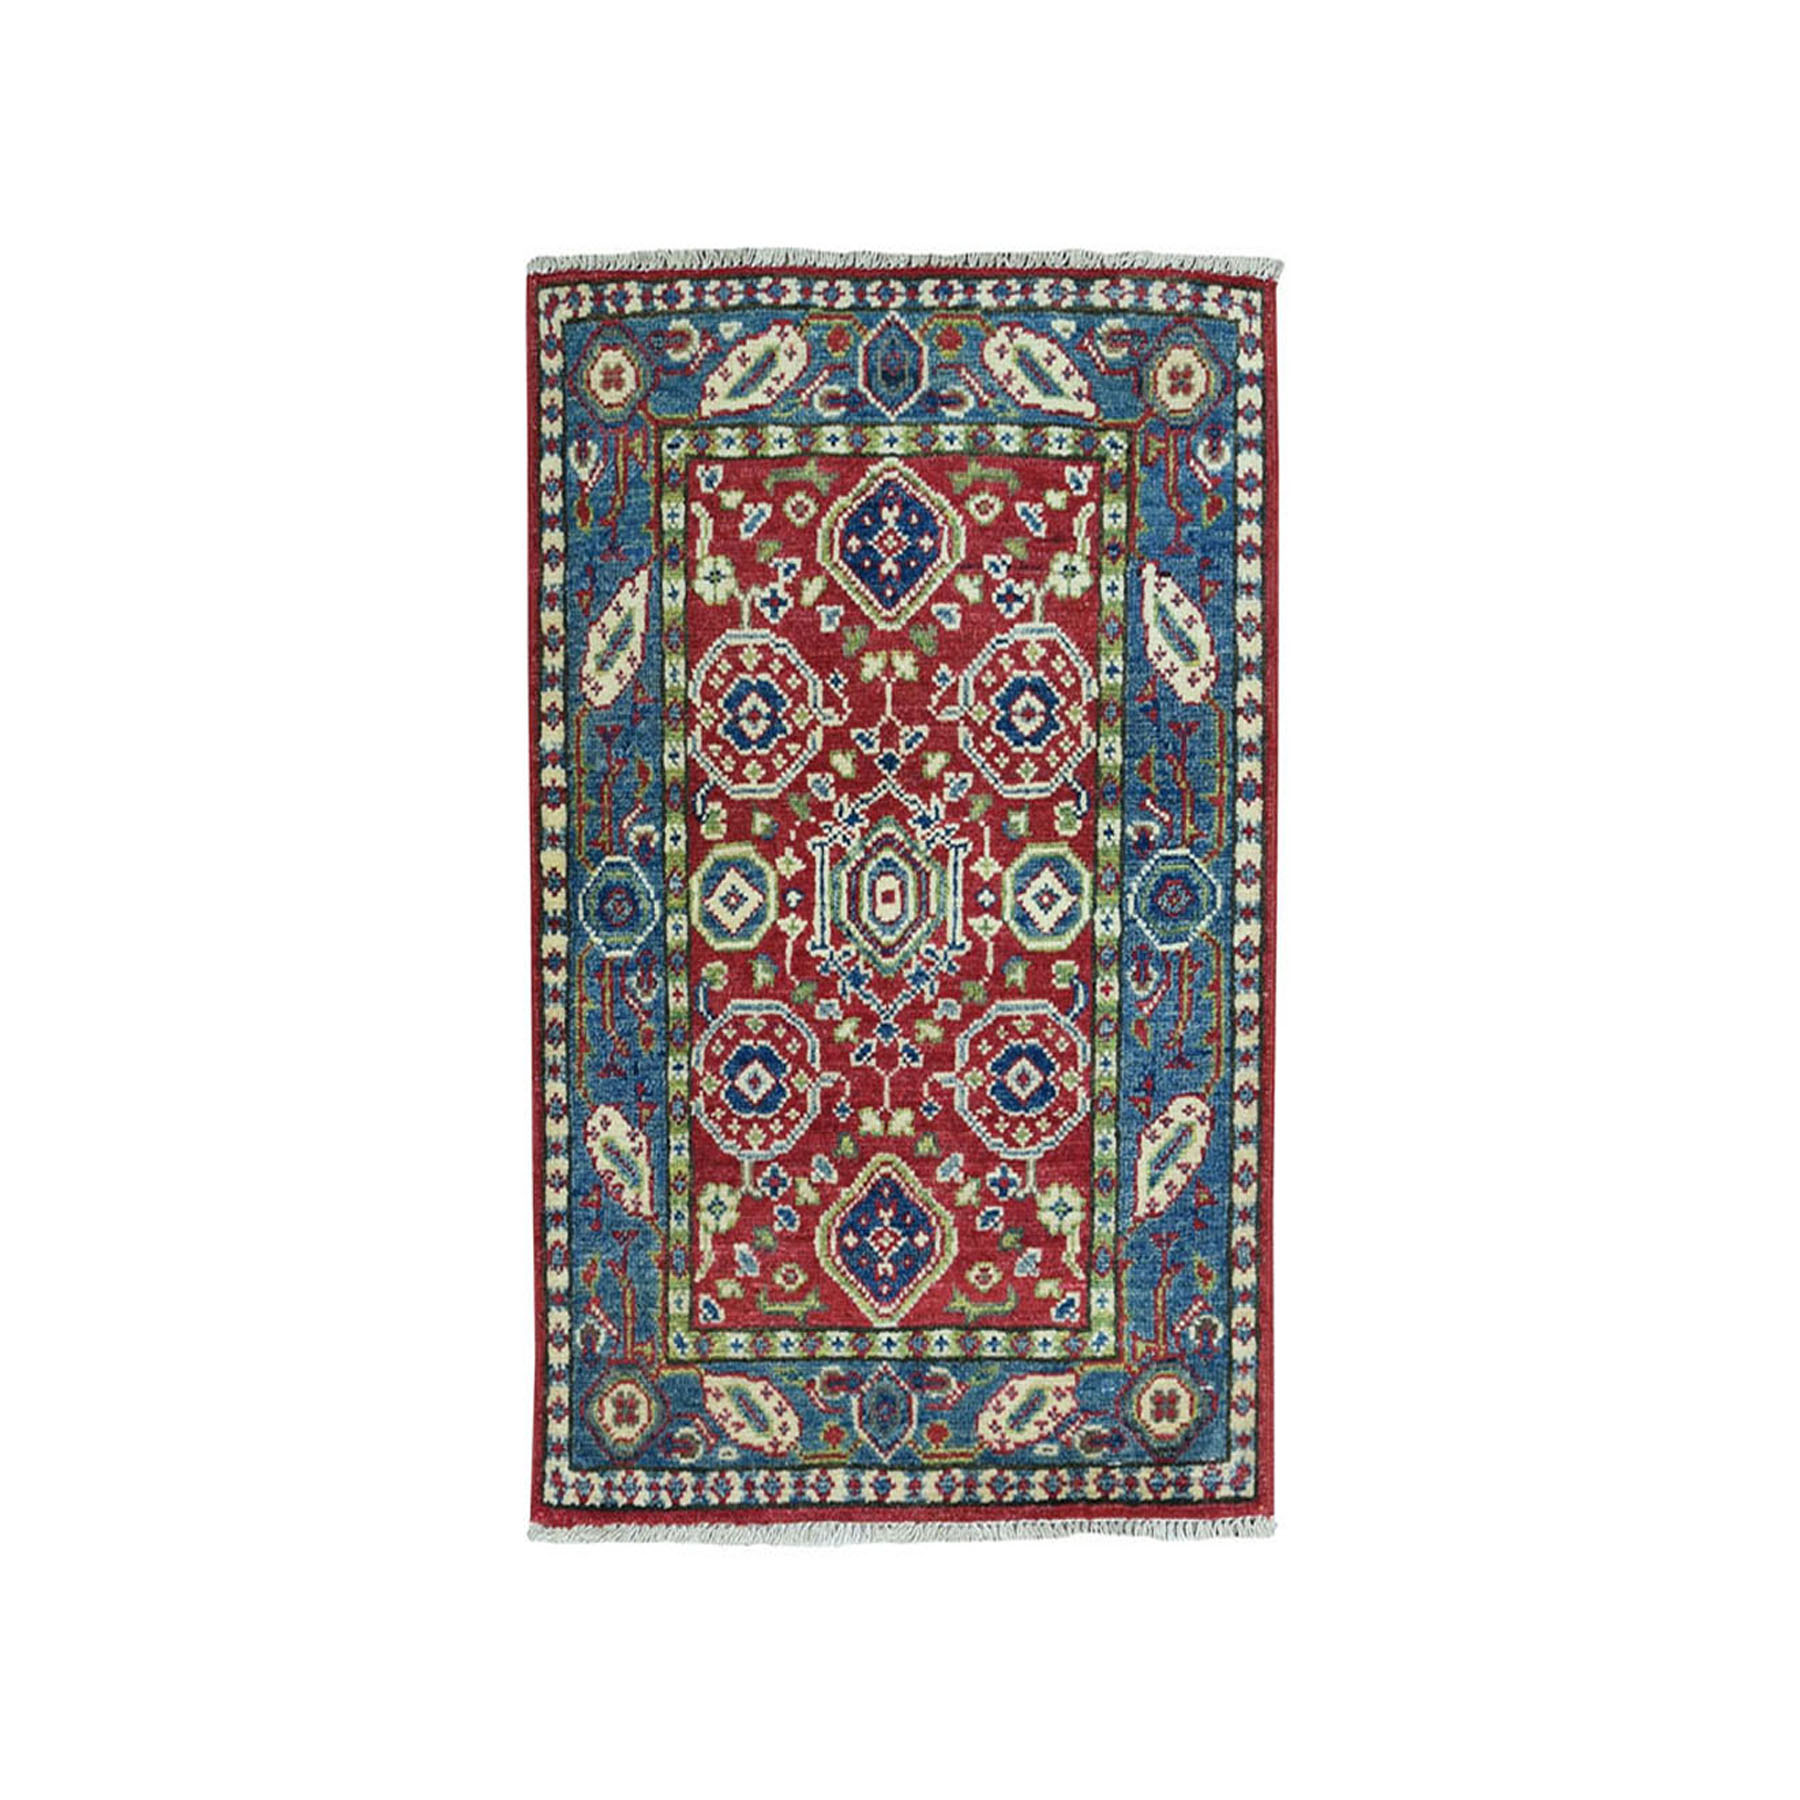 2'X2'10" Red Kazak Geometric Design Pure Wool Hand-Knotted Oriental Rug moae080c